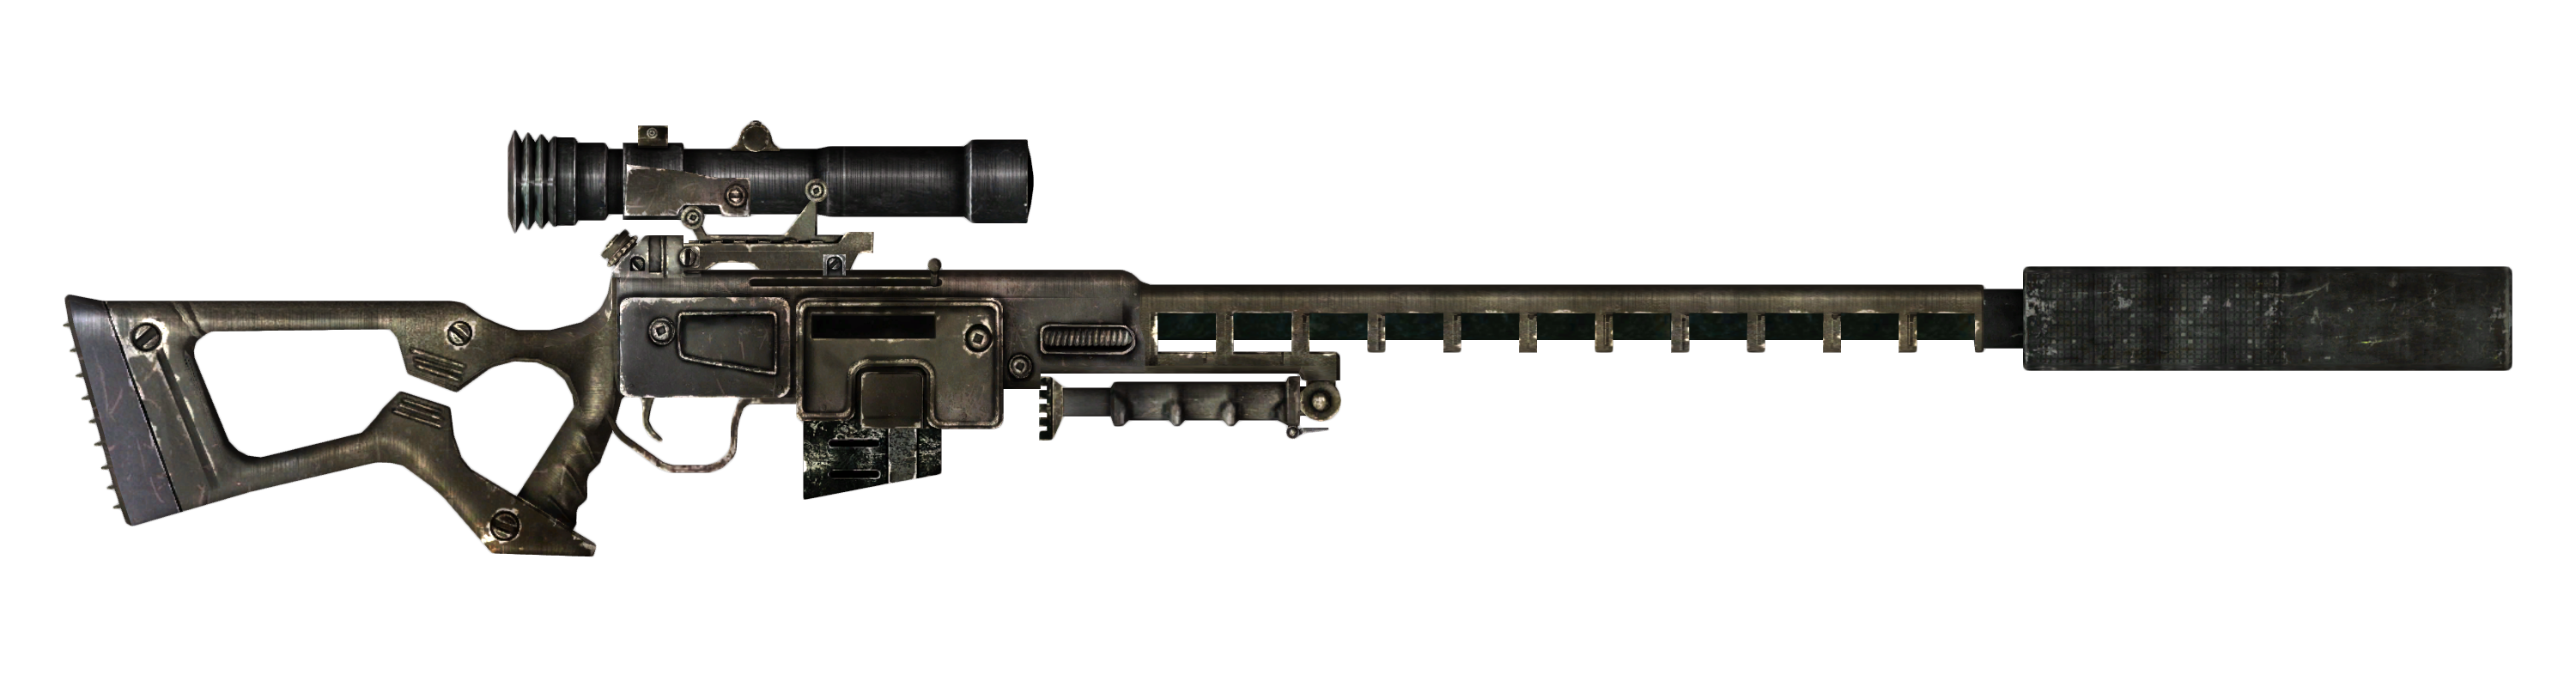 best silent sniper rifles us army details